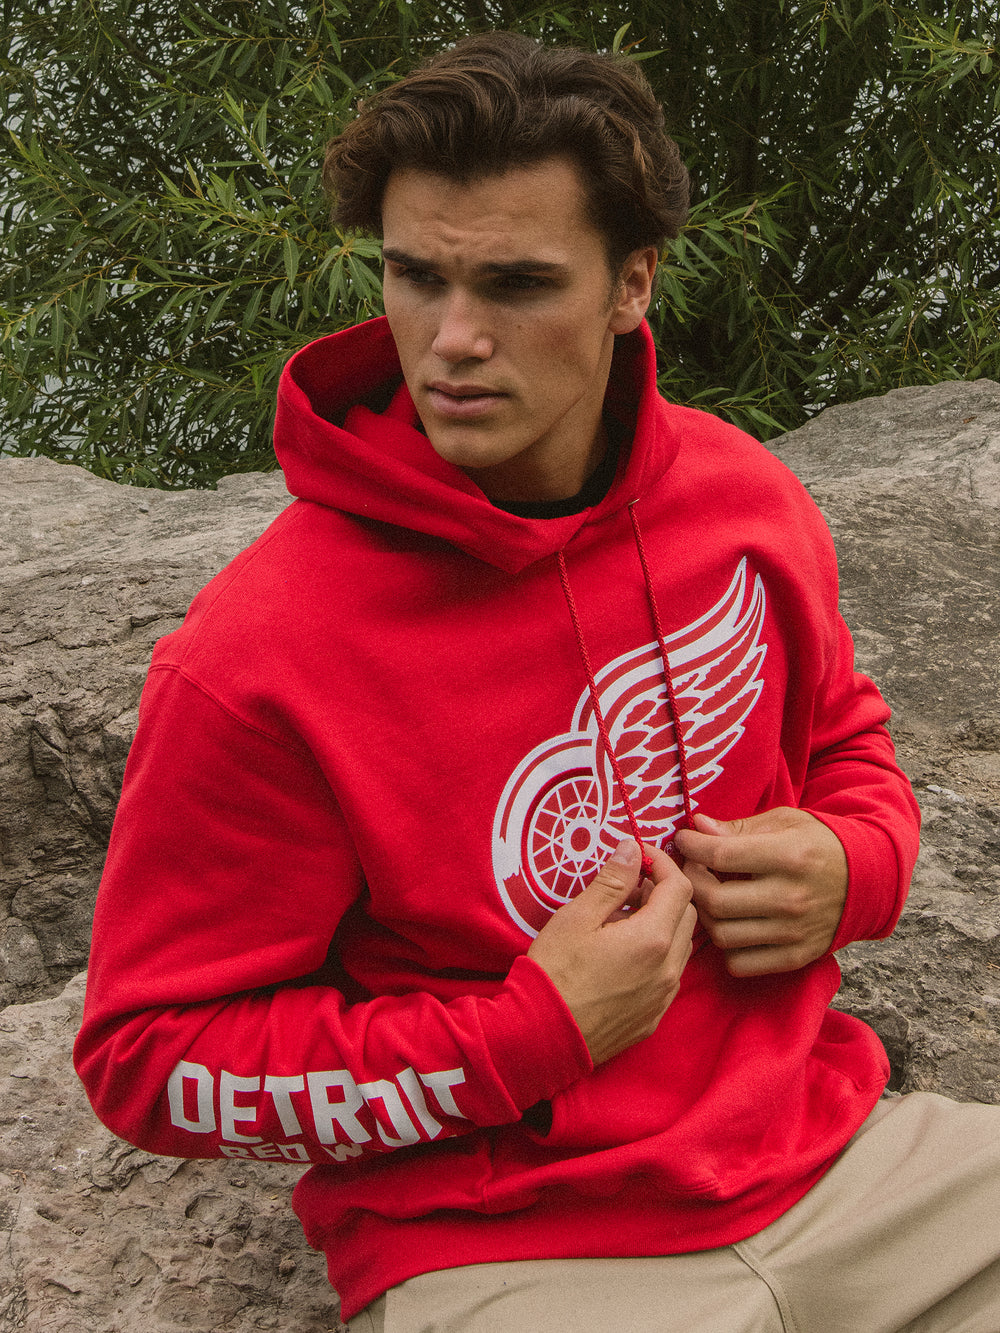 NHL Detroit Red Wings Hockey Logo Champion Hooded Sweatshirt Men